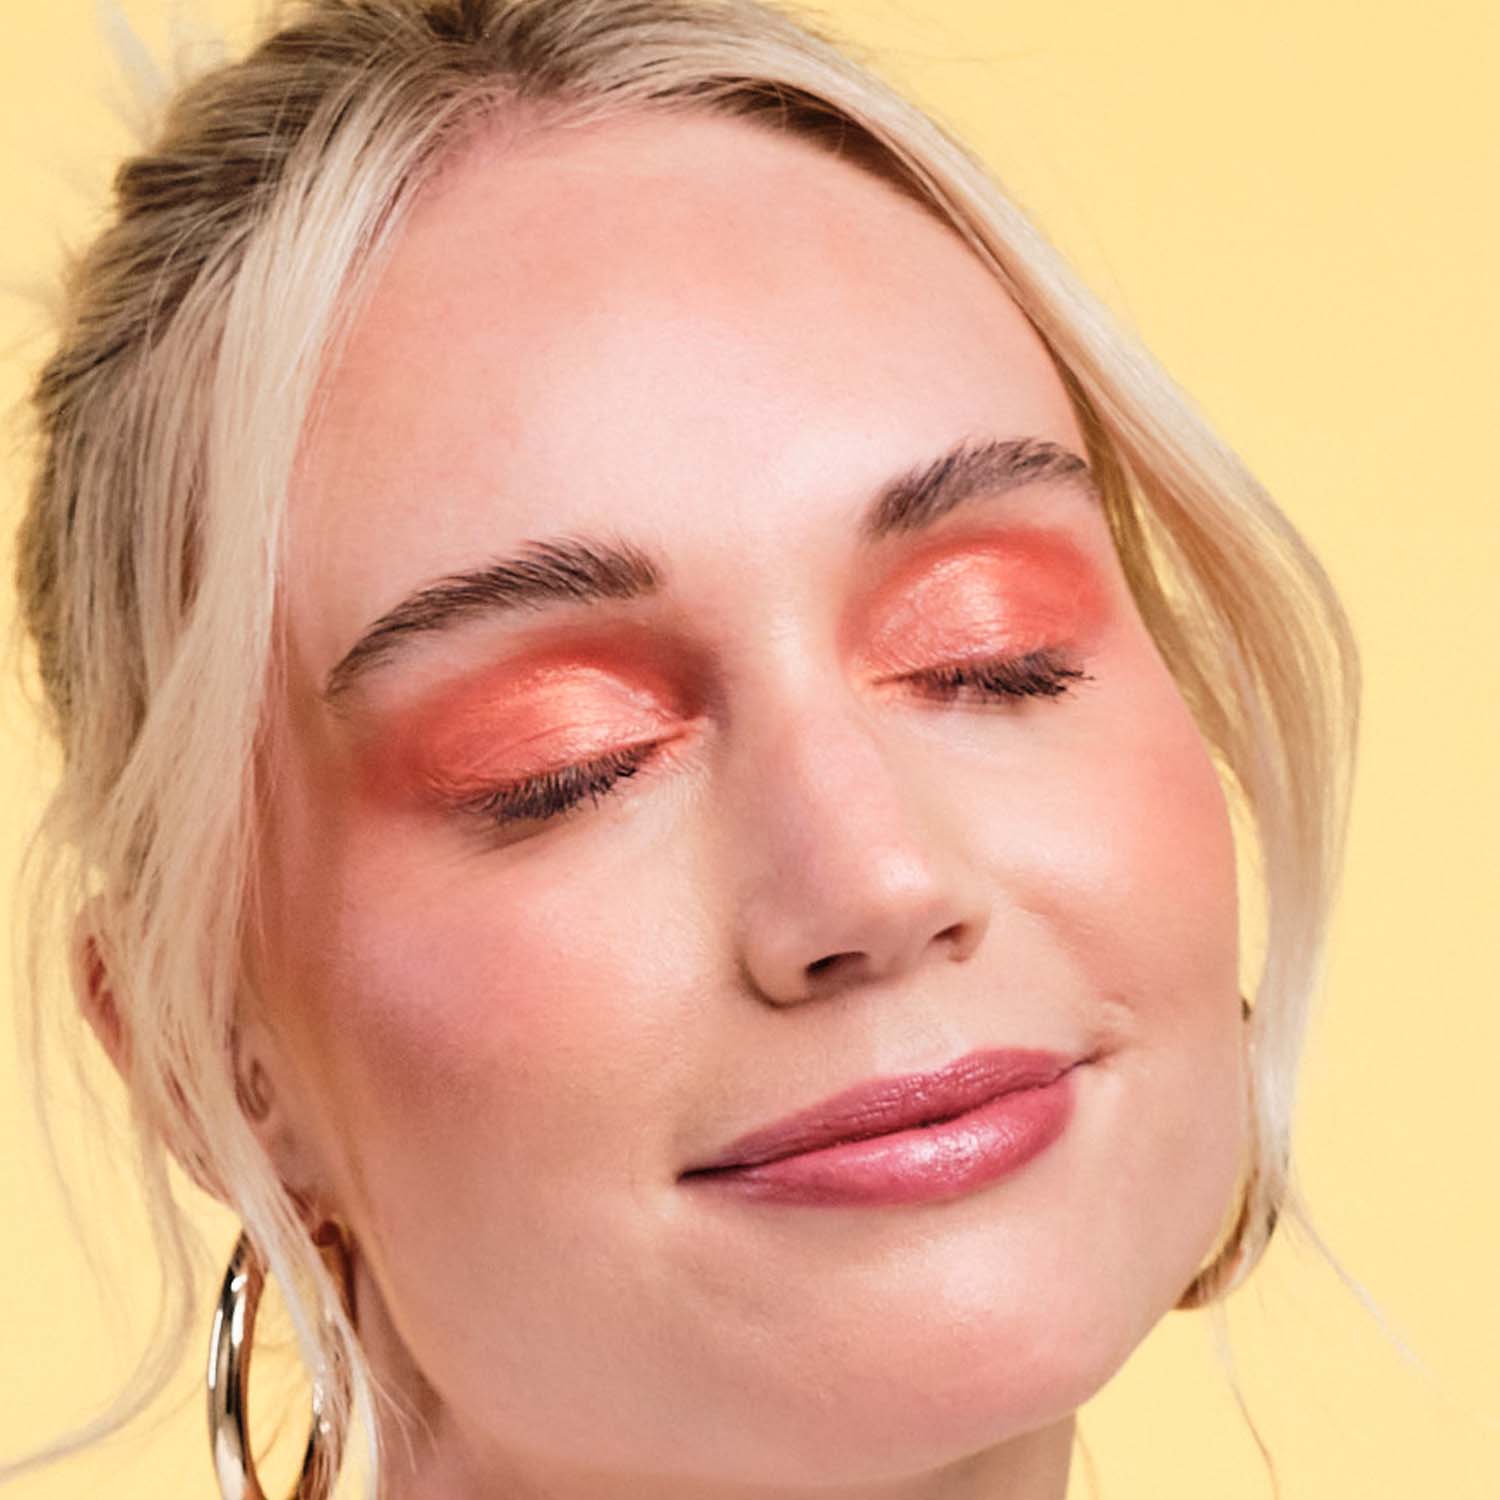 Model with closed eyes wearing orange eyeshadow